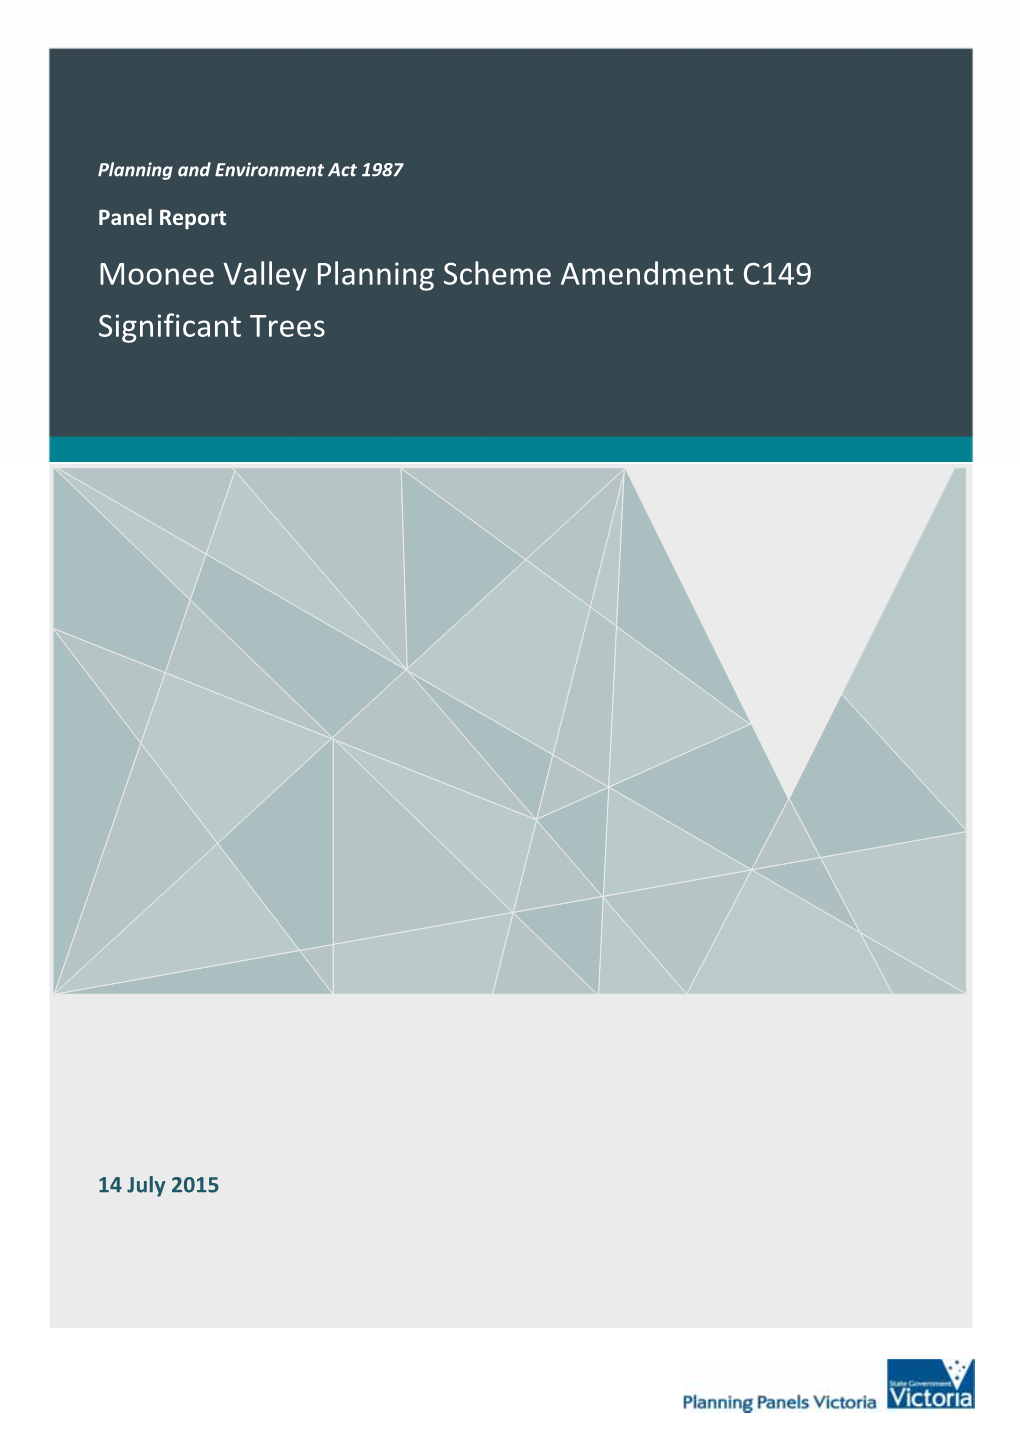 Moonee Valley Planning Scheme Amendment C149 Significant Trees